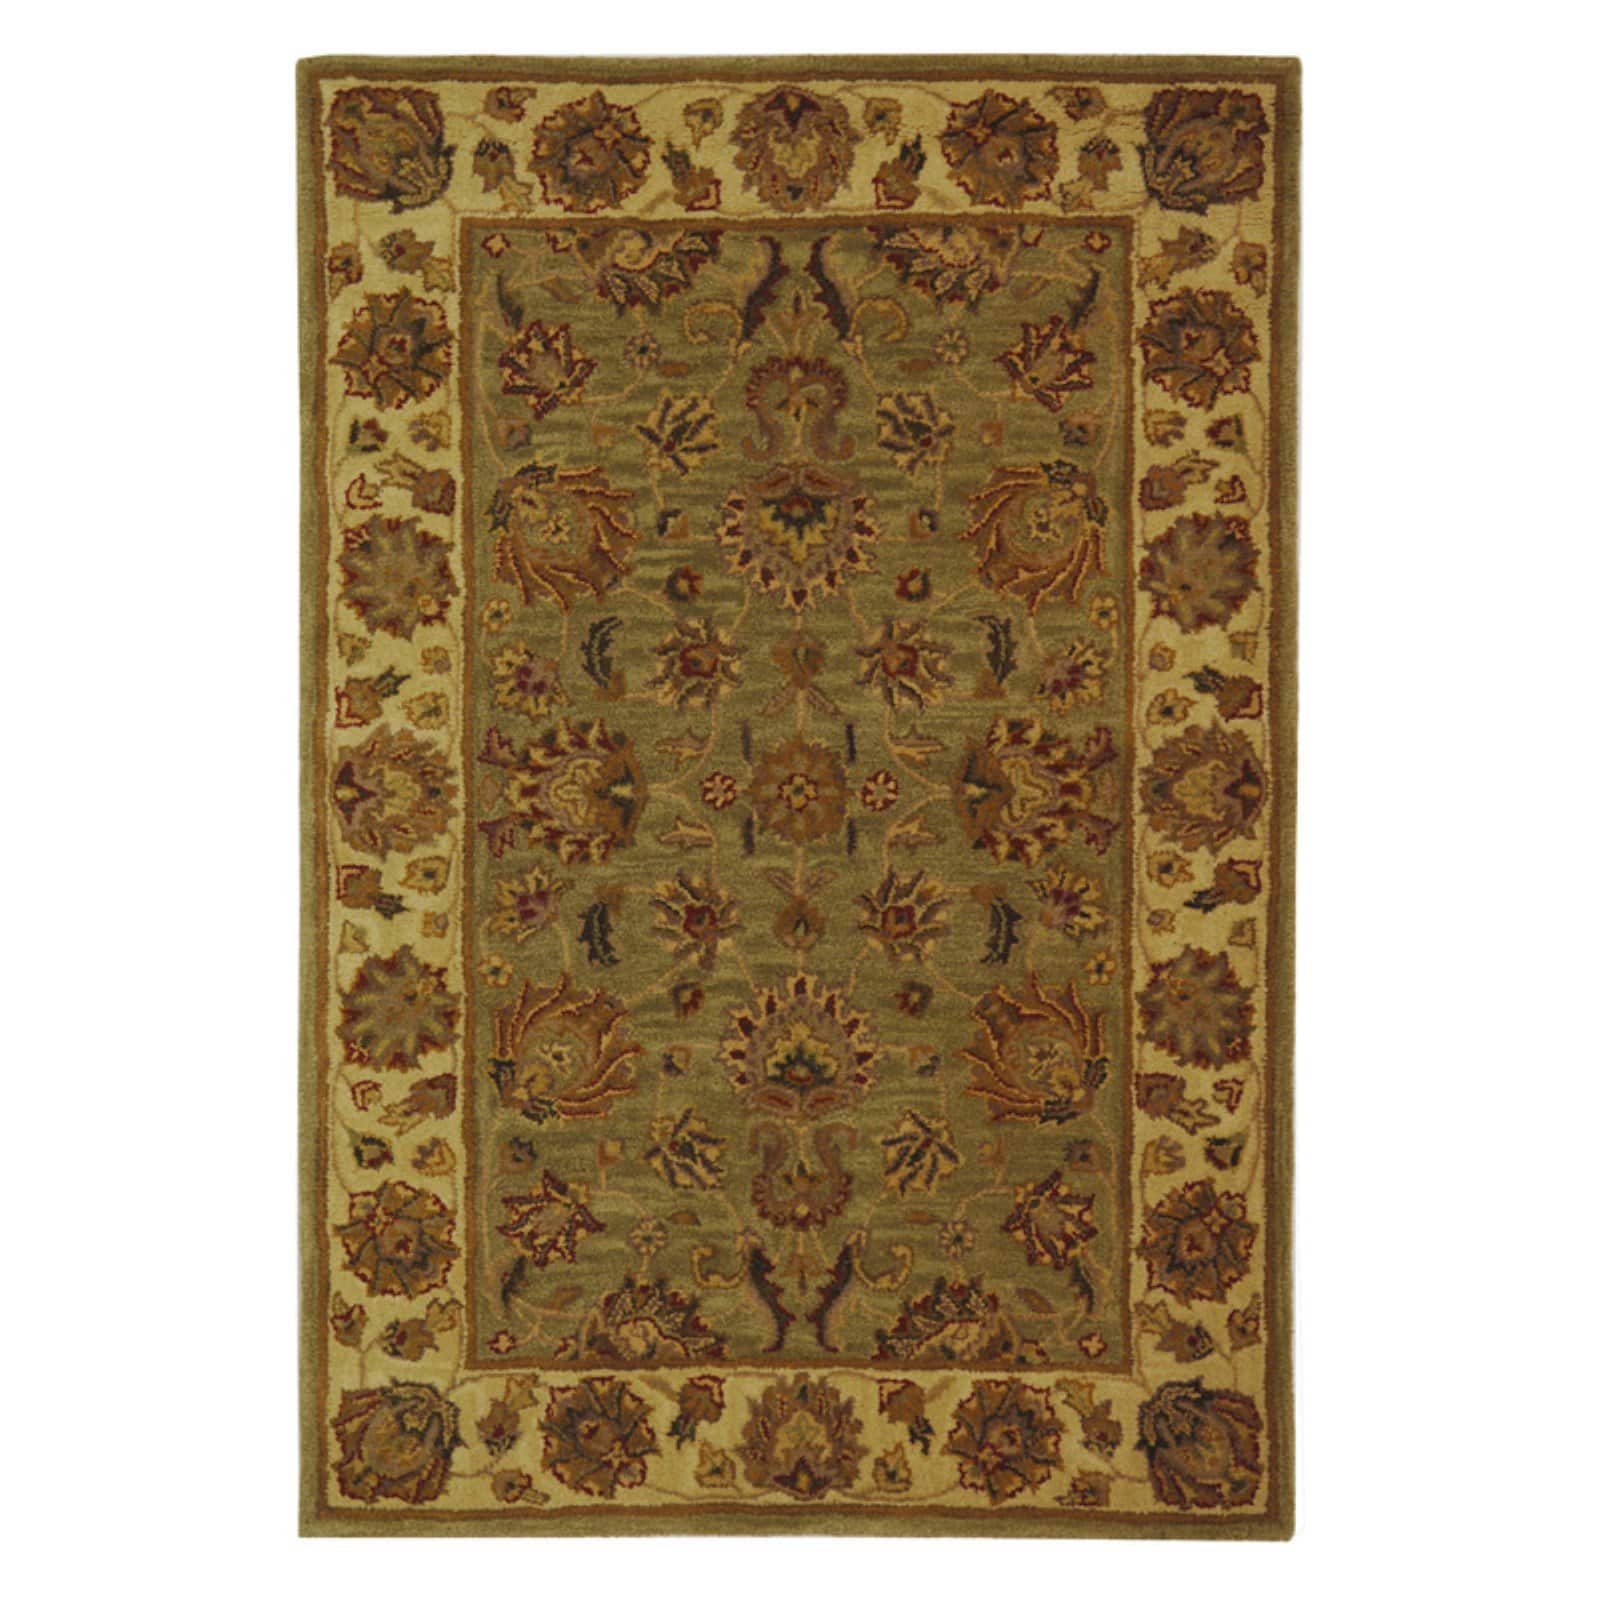 SAFAVIEH Heritage Regis Traditional Wool Area Rug, Green/Gold, 3' x 5' - image 5 of 10